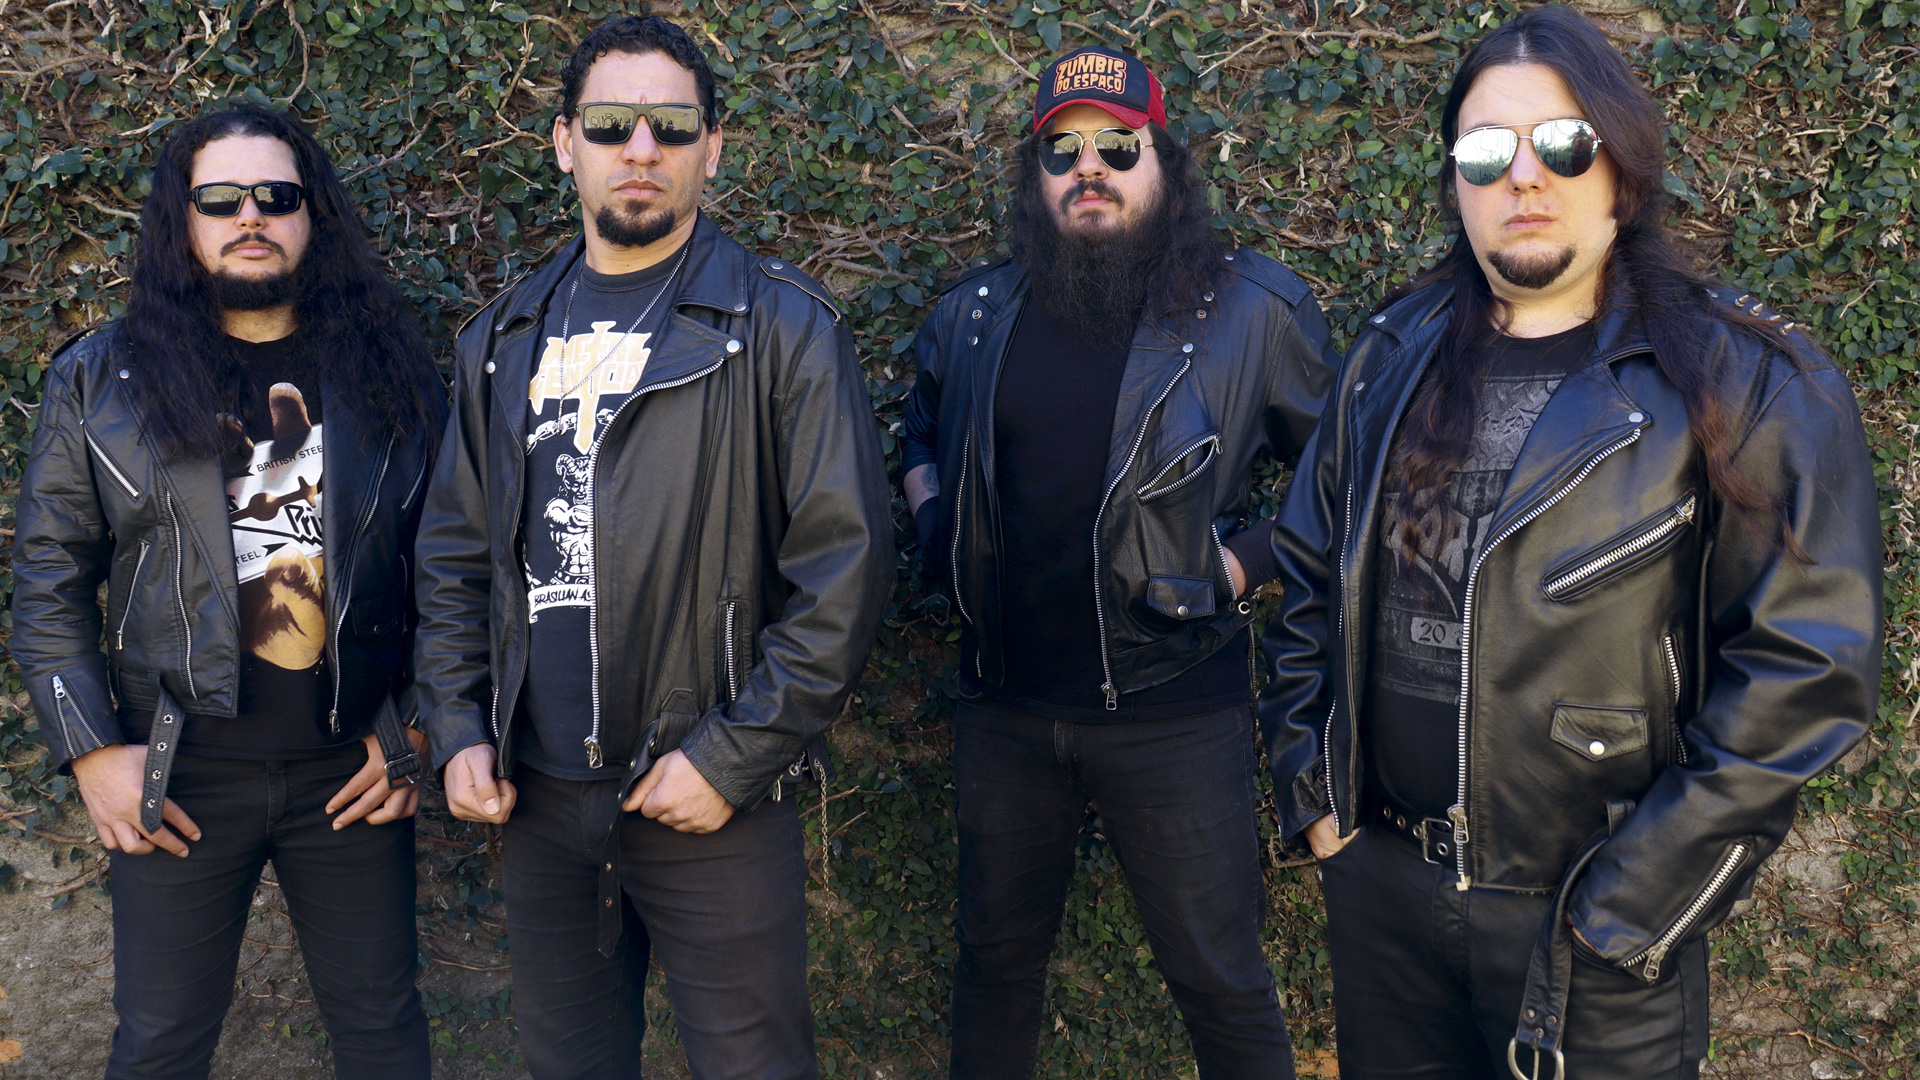  Living Metal: Neves Records lança ‘Viviendo el Metal’ em vinil 